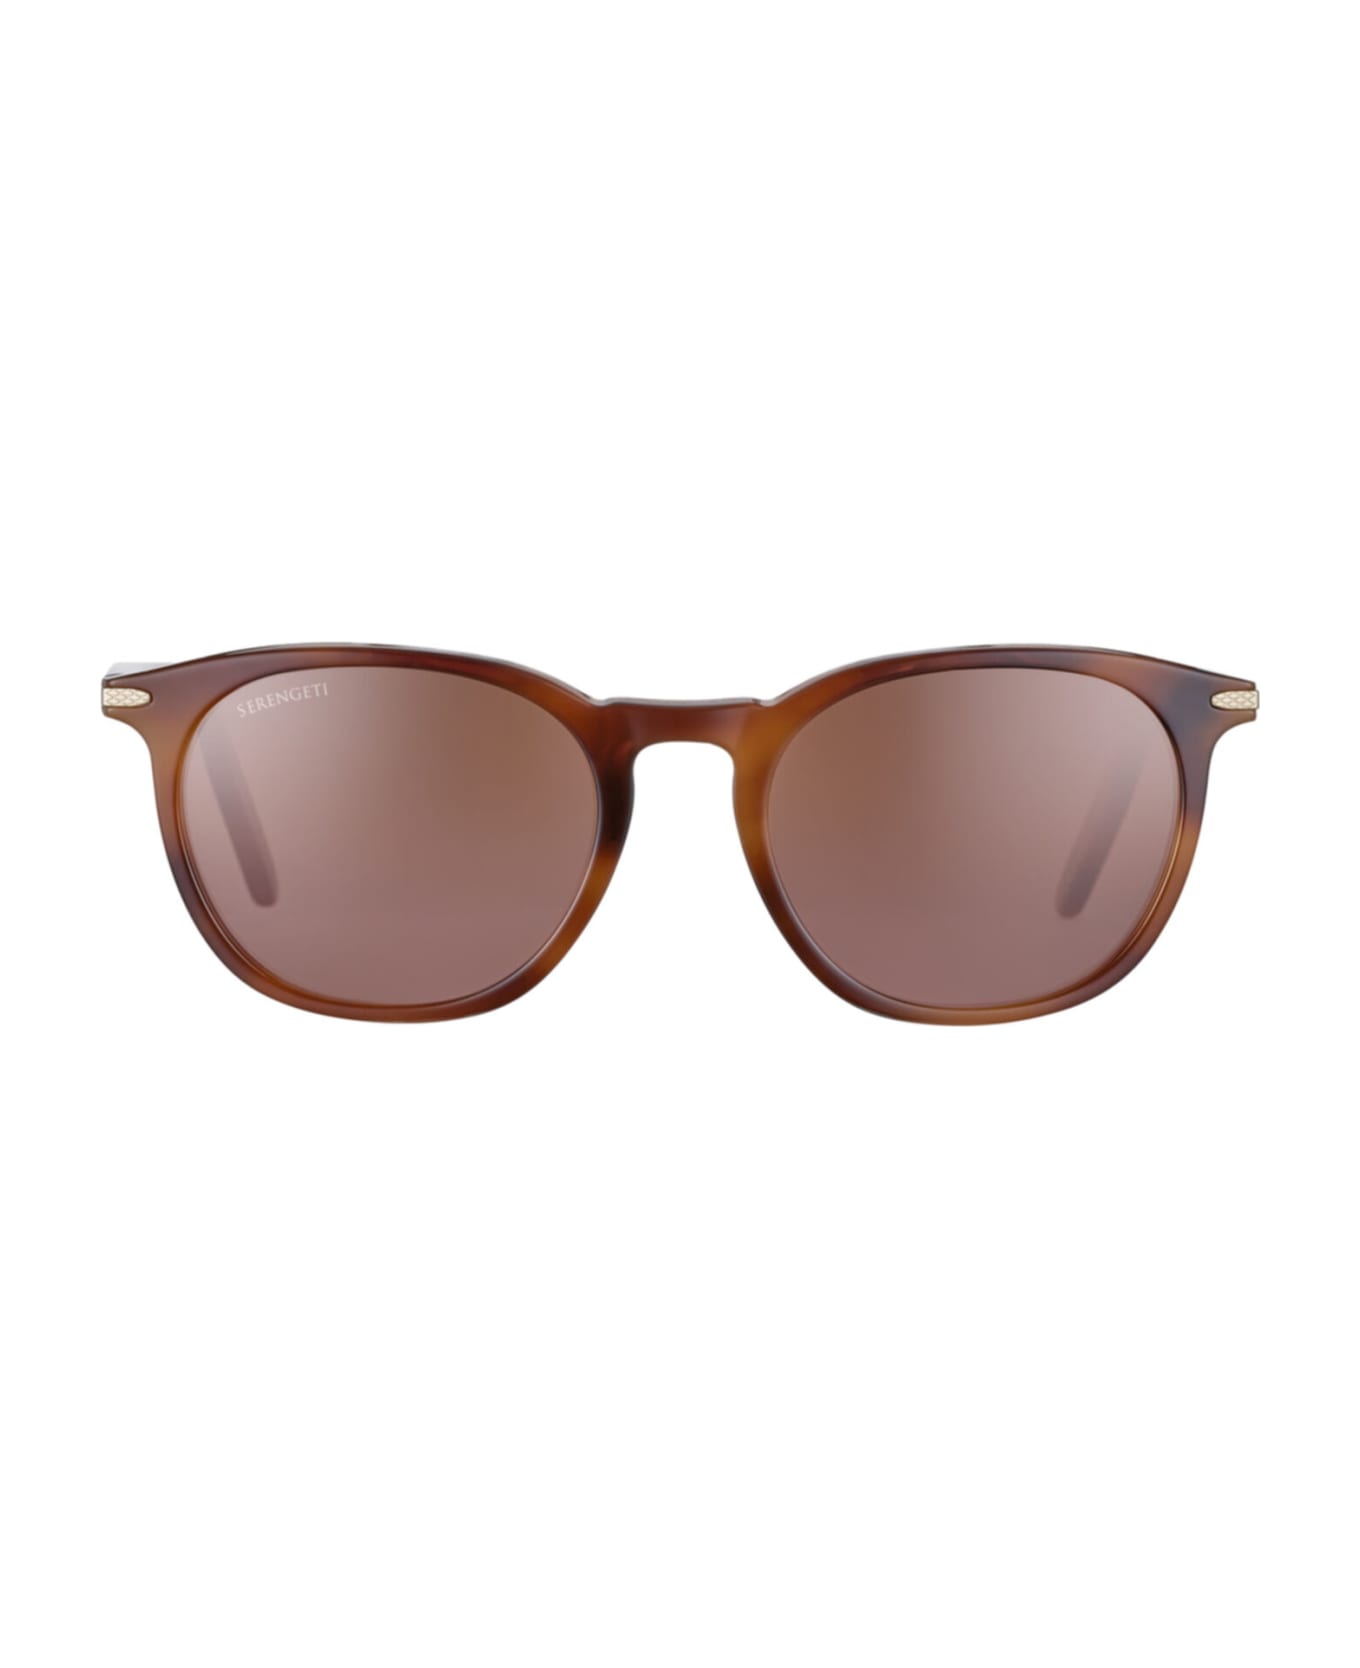 Serengeti Eyewear Arlie 8938 Sunglasses - Shiny Red Moss Tortoise サングラス